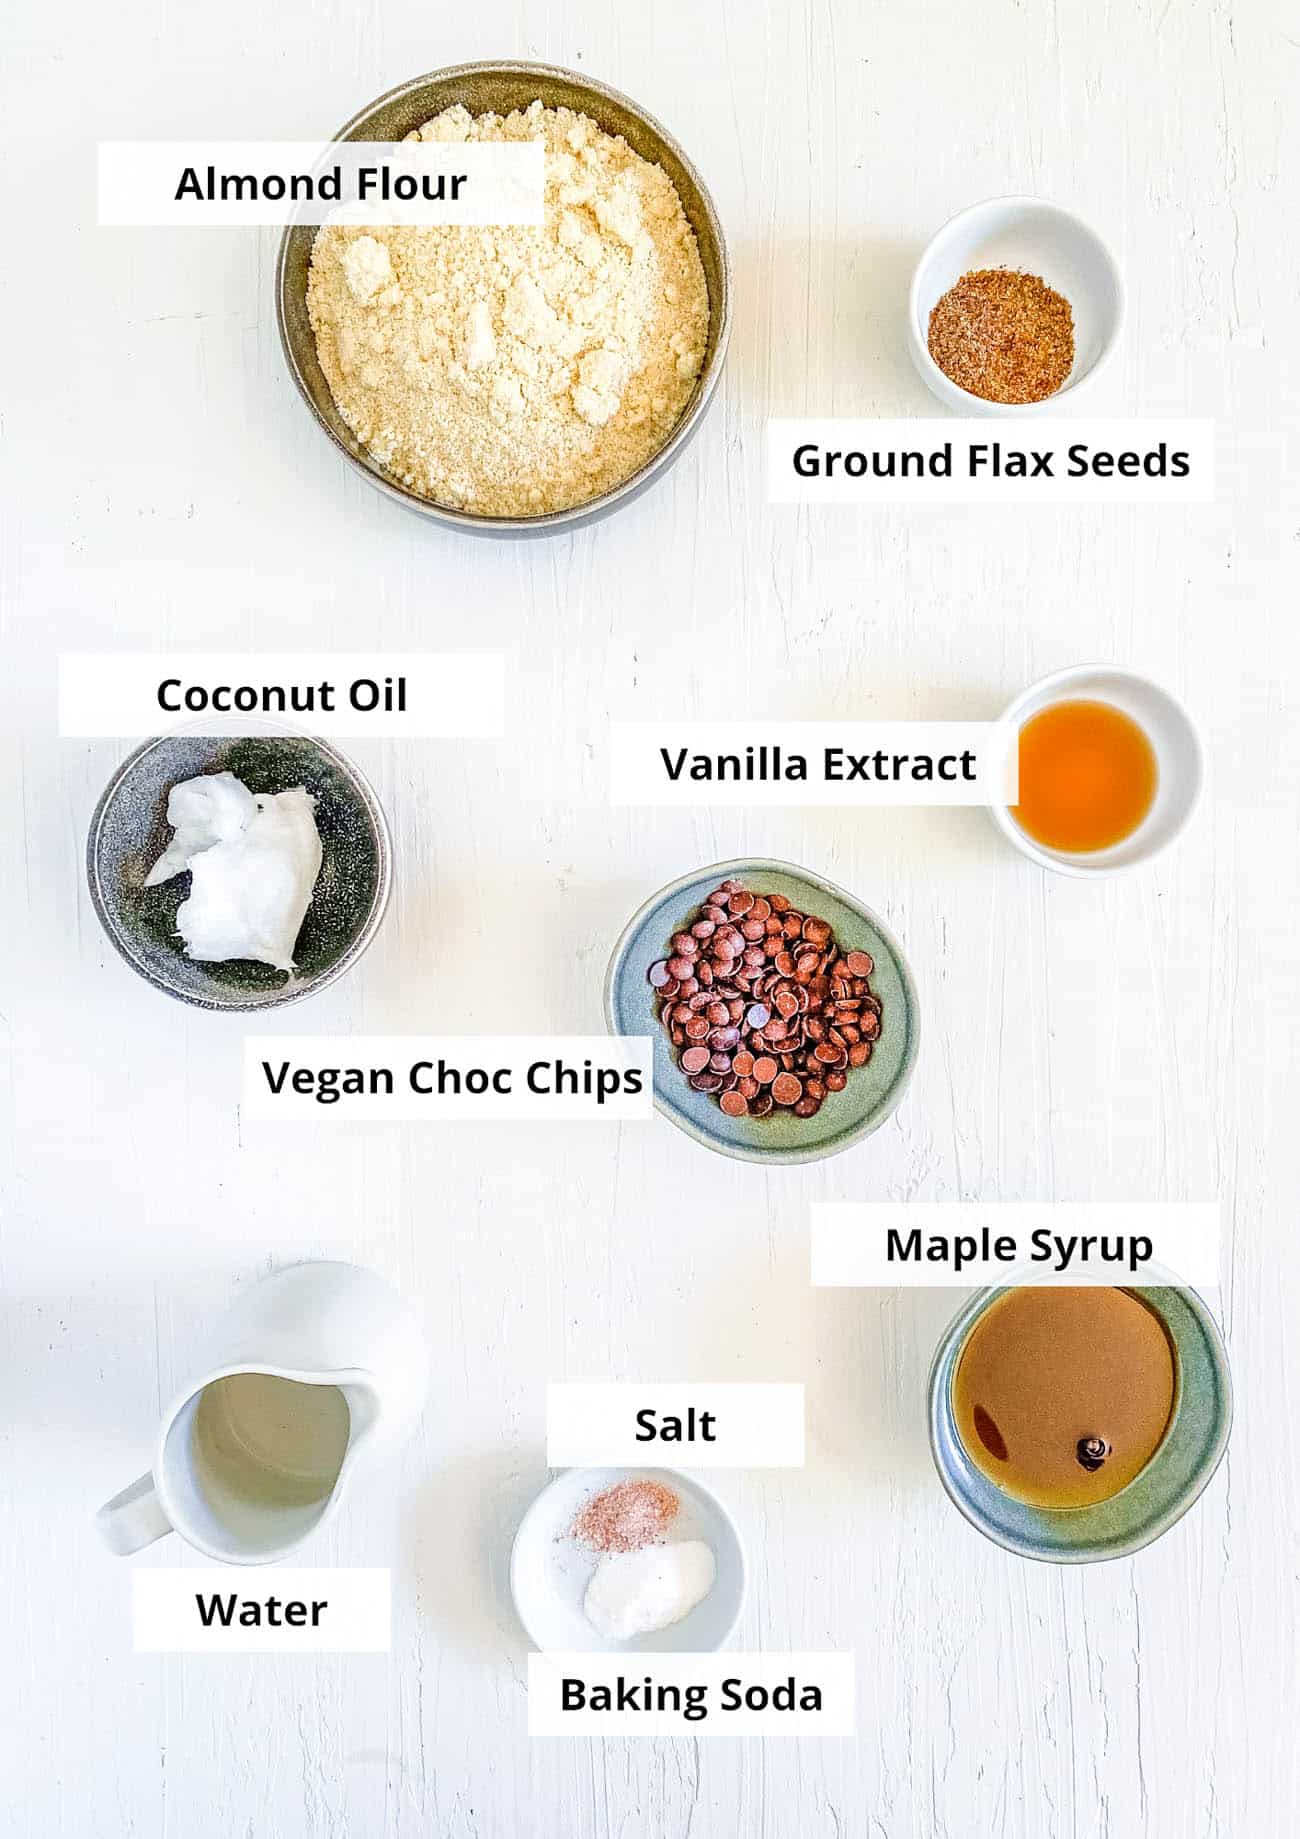 ingredients for healthy easy gluten free vegan almond flour cookies recipe (keto, paleo)